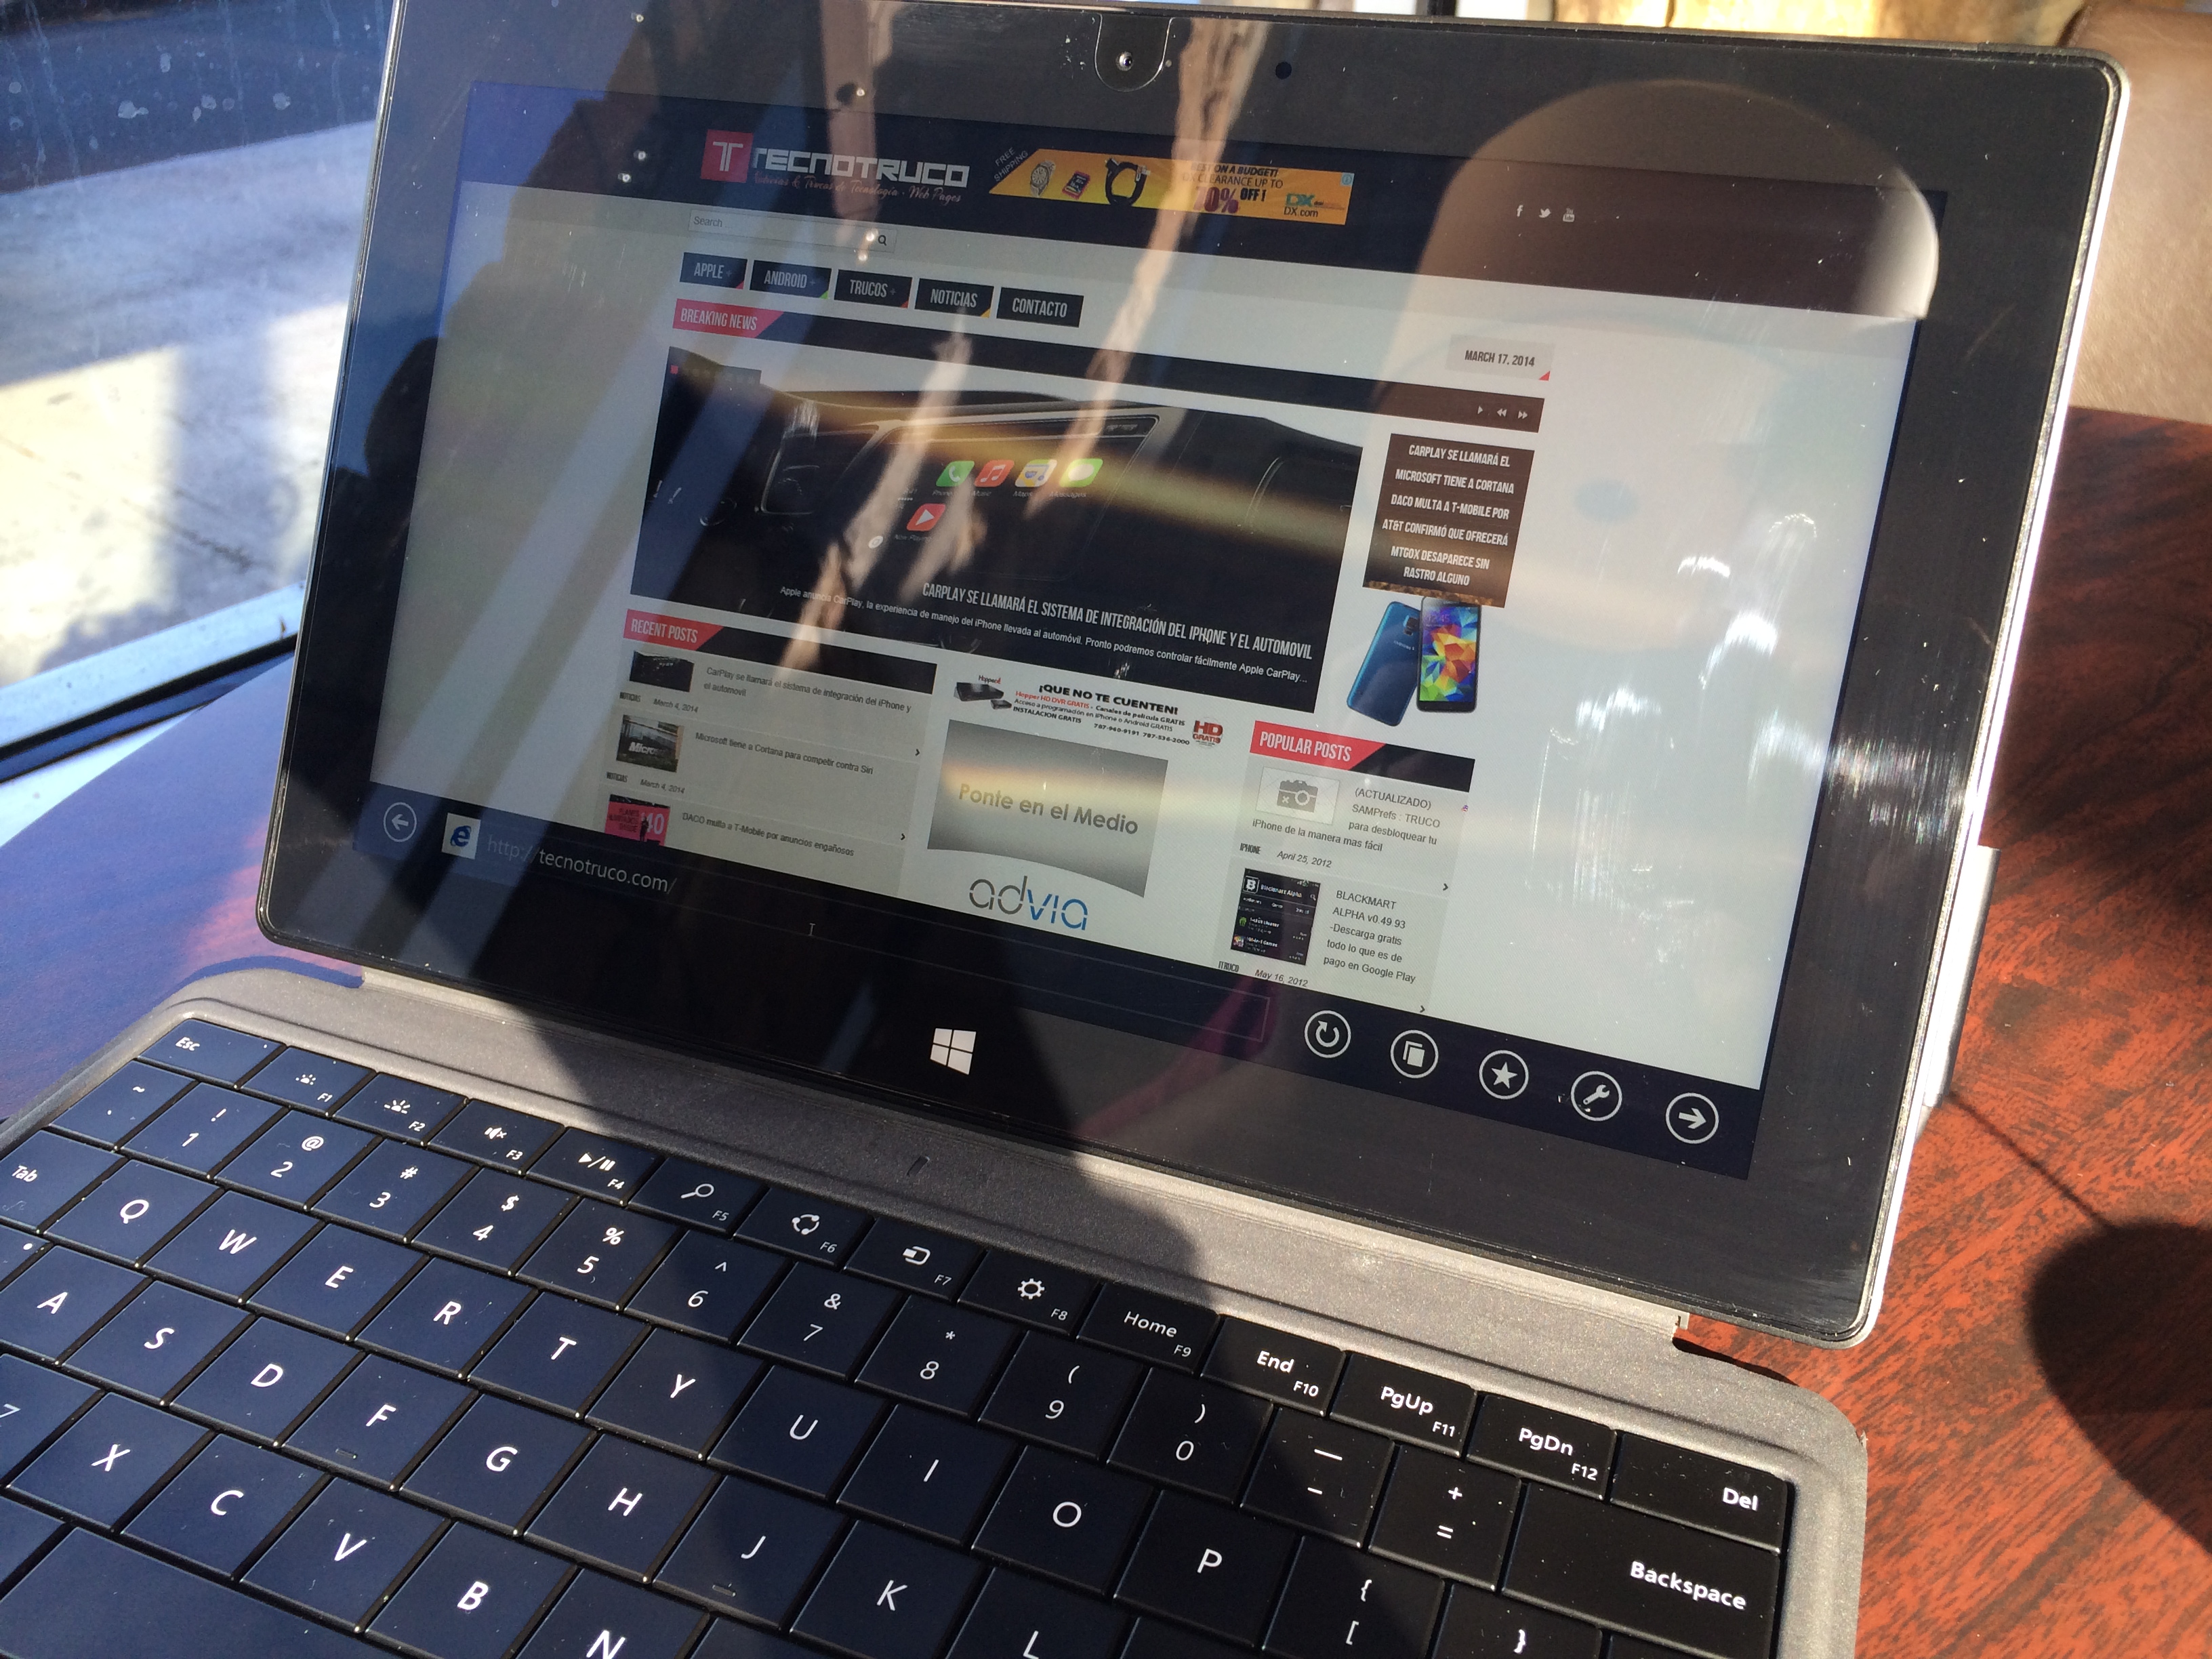 Microsoft Surface 2 Llega a la Red 4G LTE de AT&T